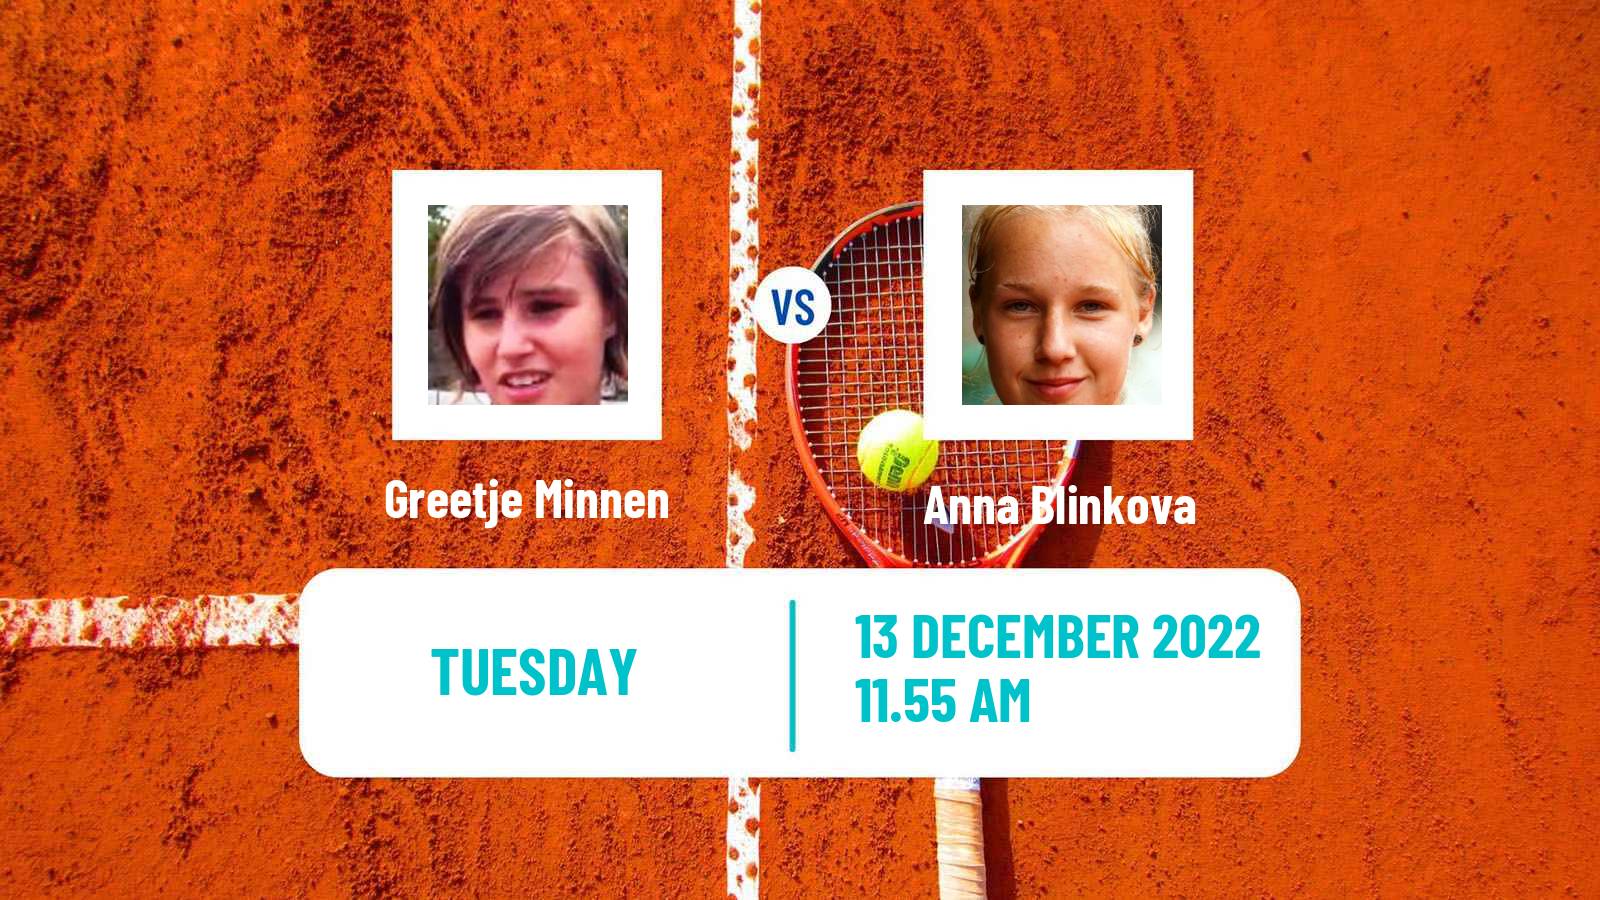 Tennis ATP Challenger Greetje Minnen - Anna Blinkova